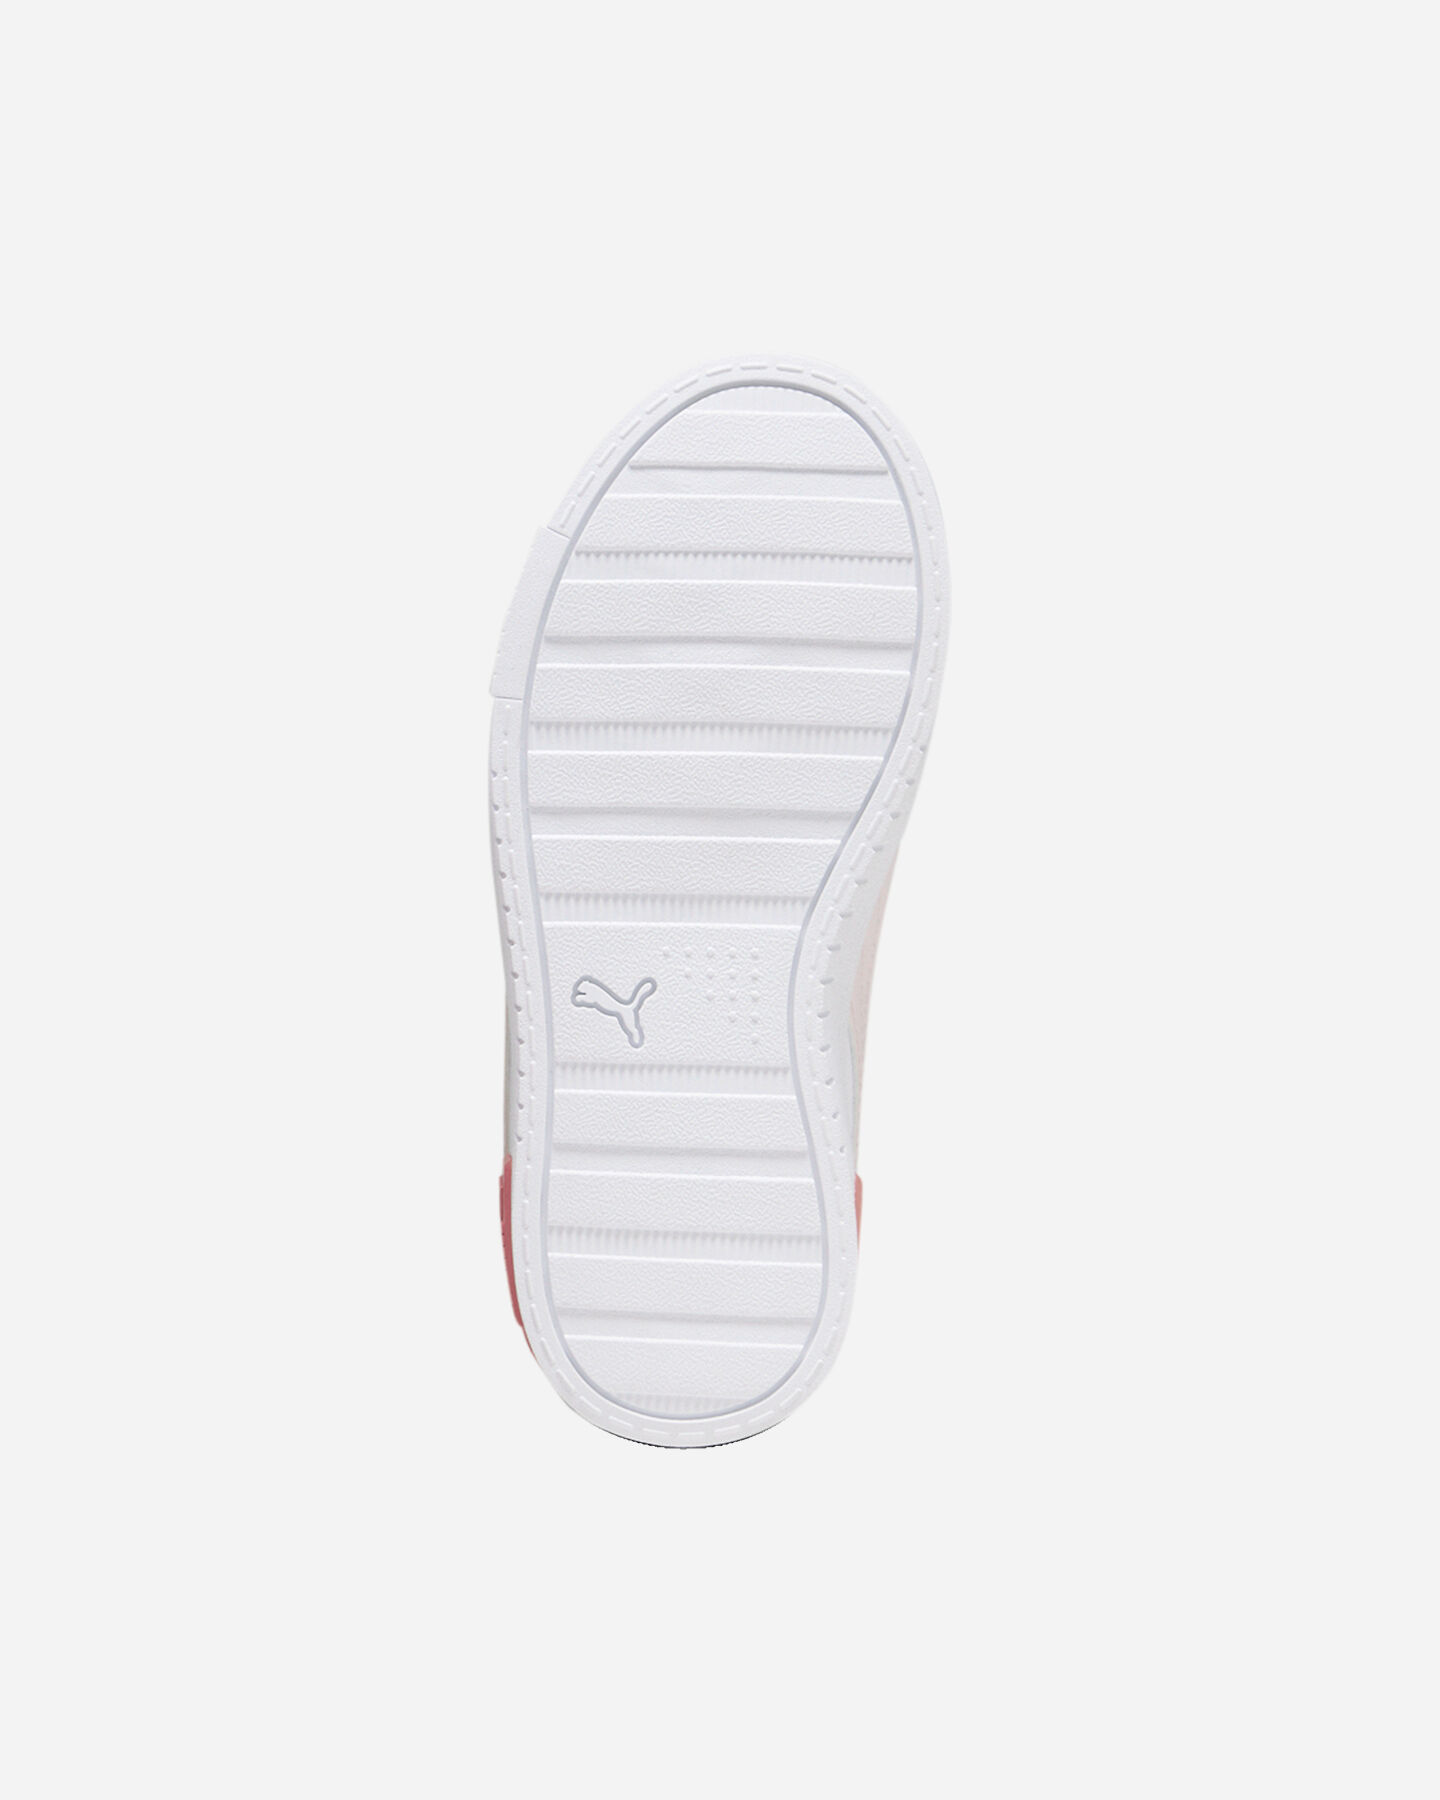  Scarpe sneakers PUMA JADA PS JR S5584451|22|1.5 scatto 2